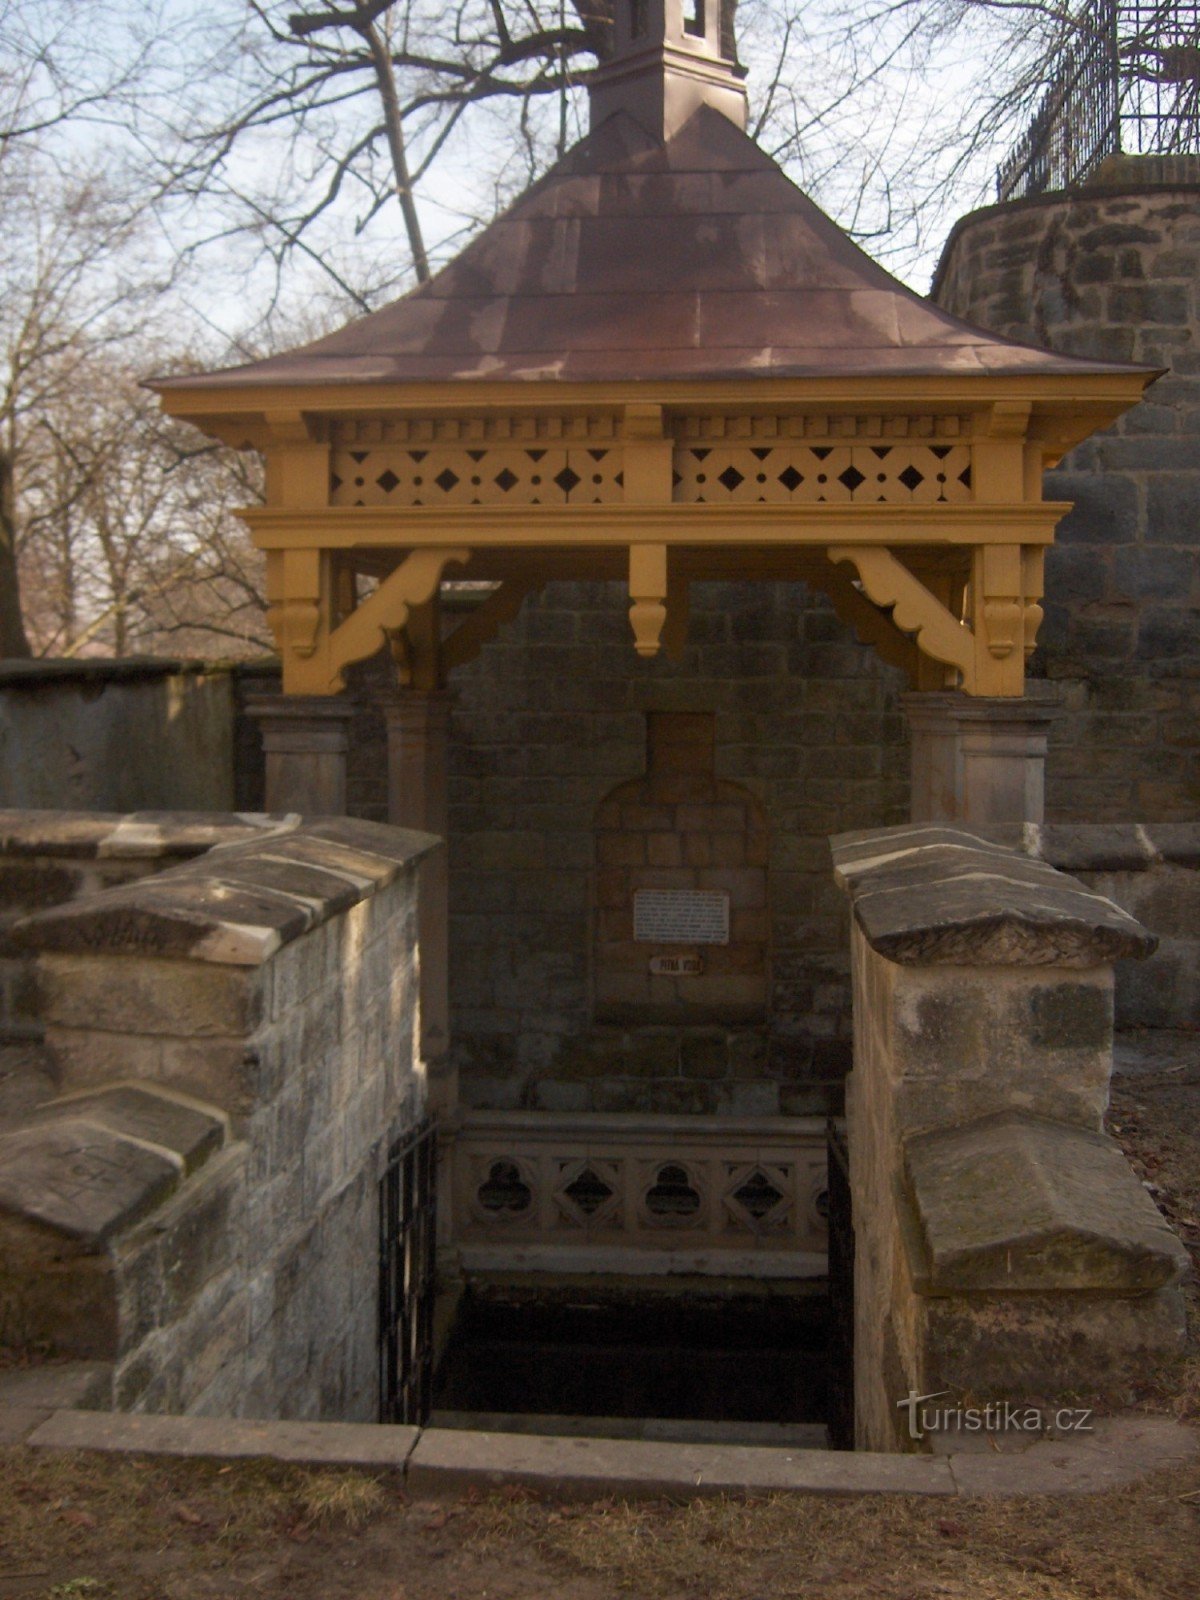 Le puits de Božena